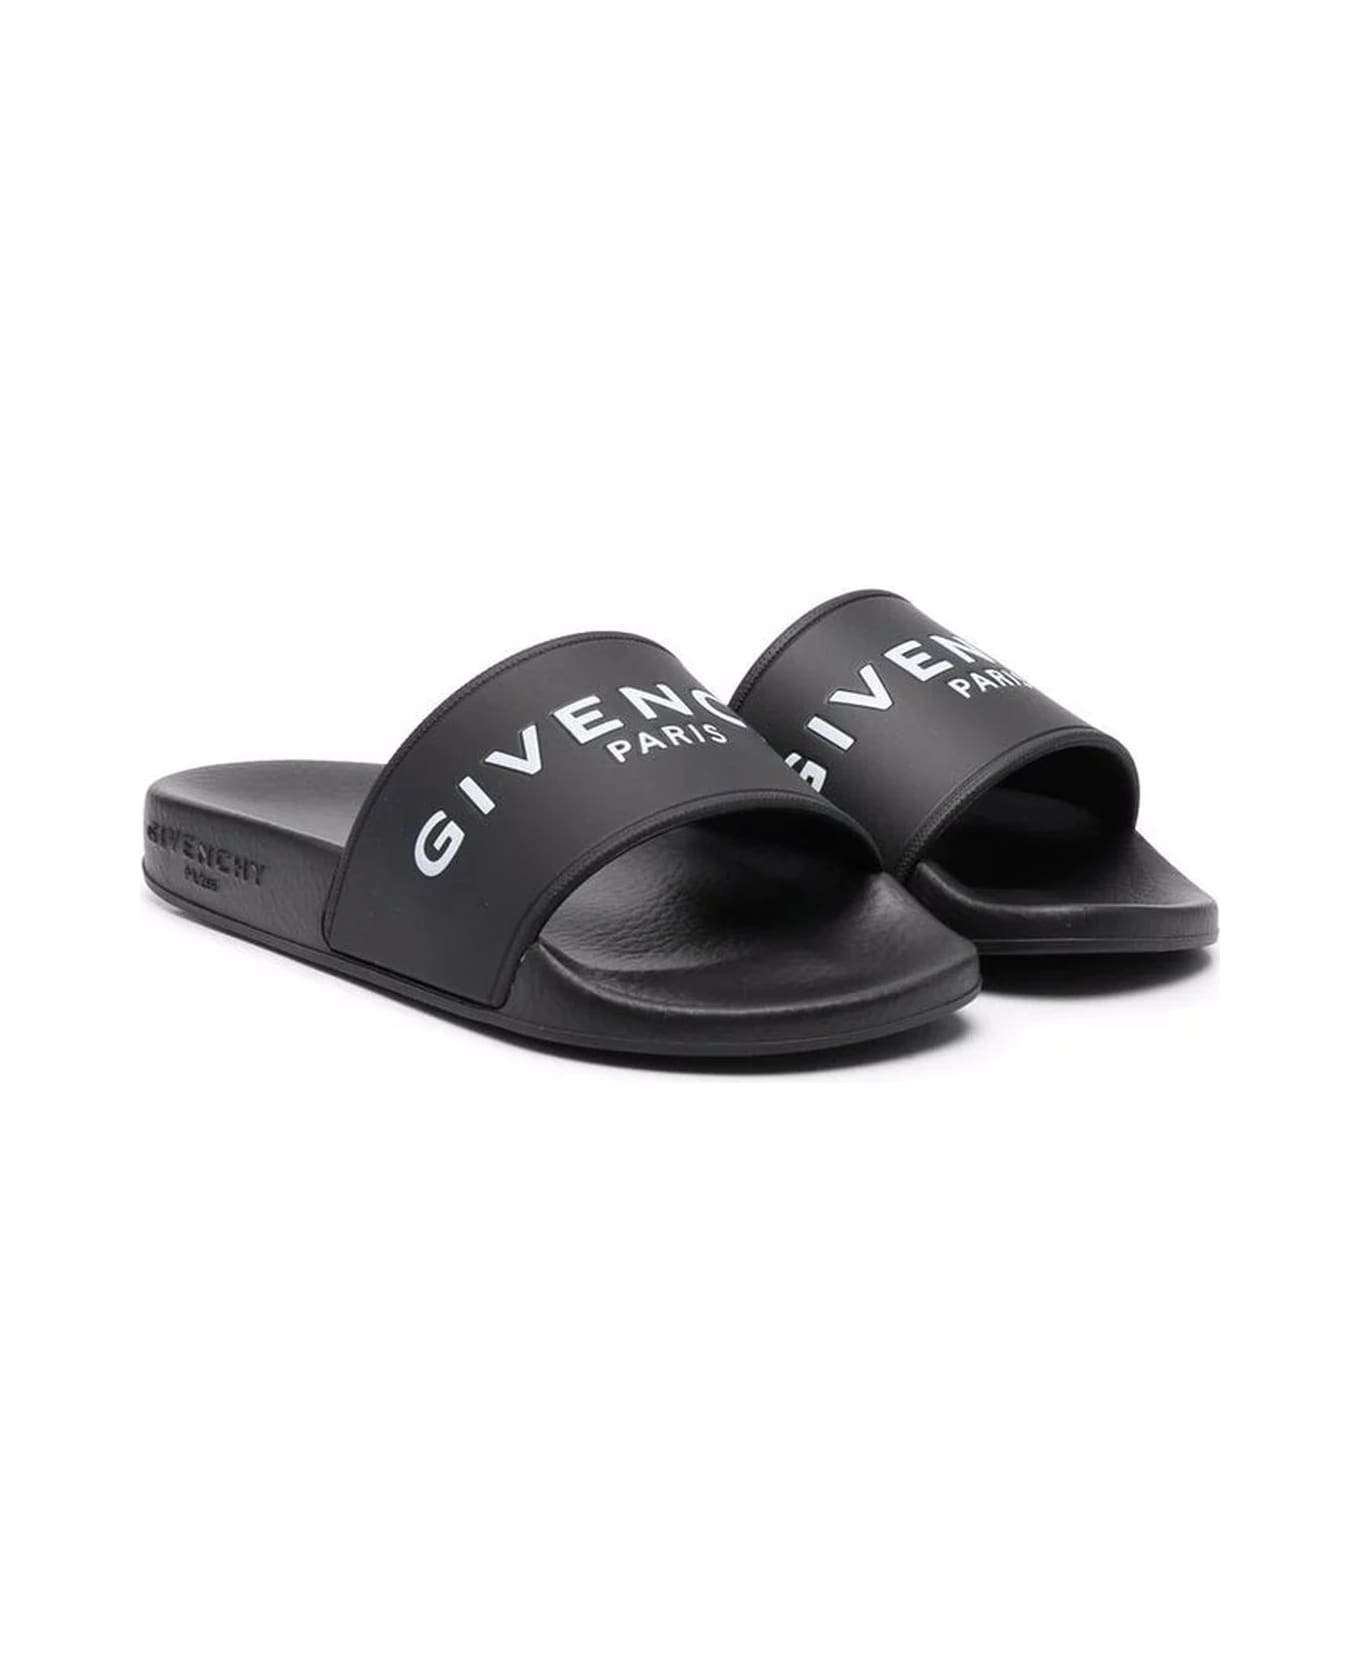 Givenchy Black Pvc Slippers - Nero